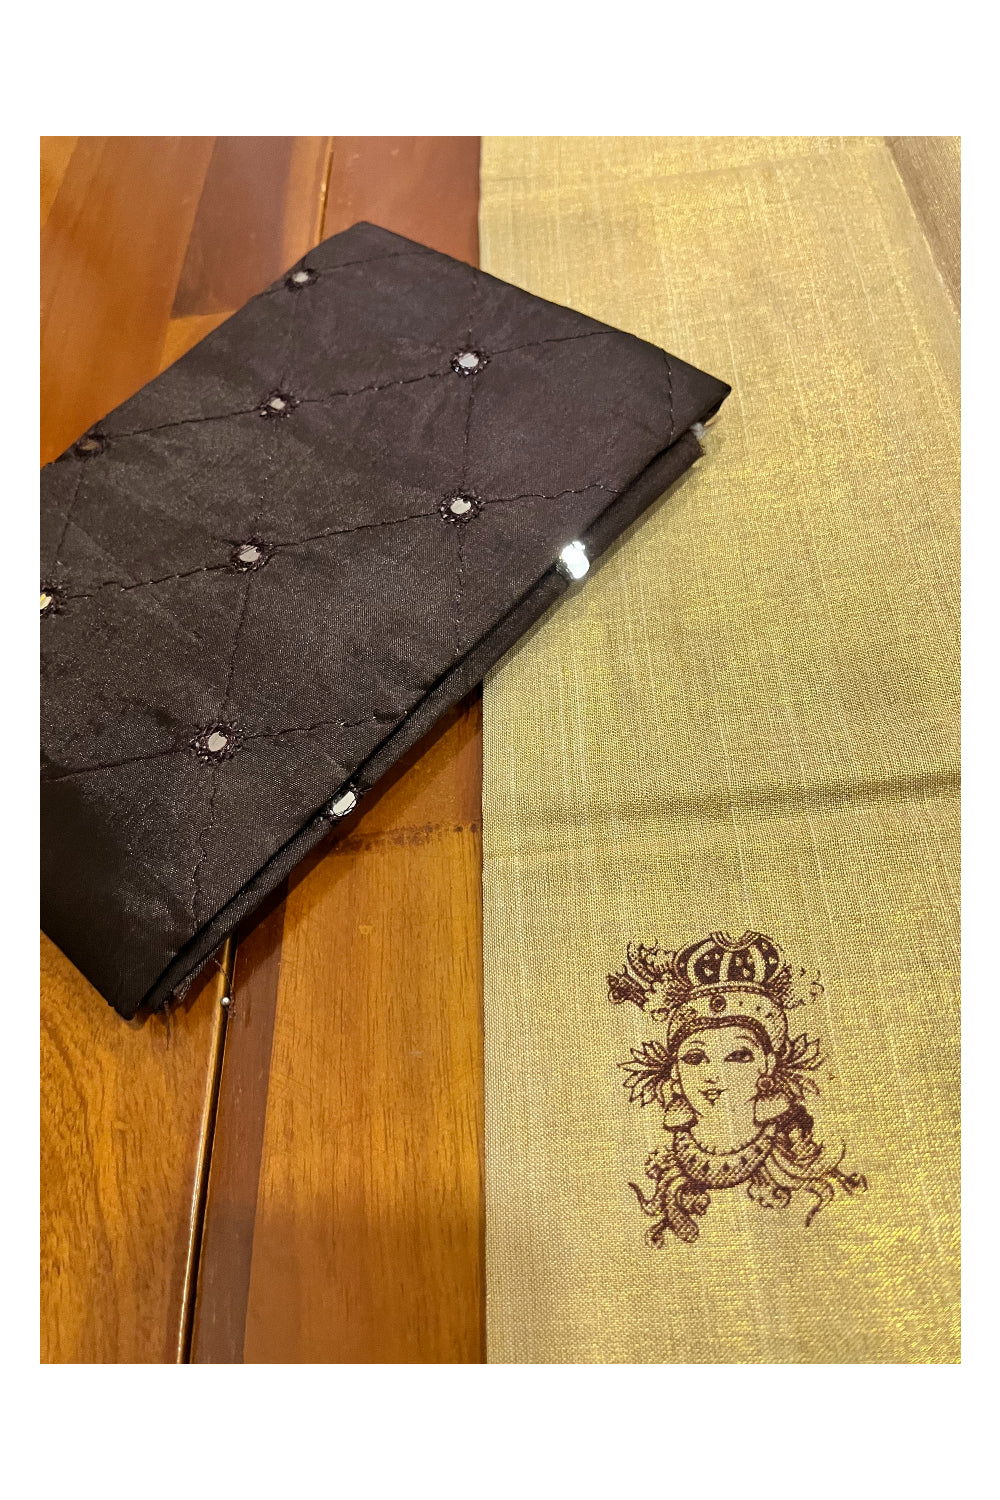 Kerala Tissue Block Printed Pavada and Brown Blouse Material for Kids 3 Meters